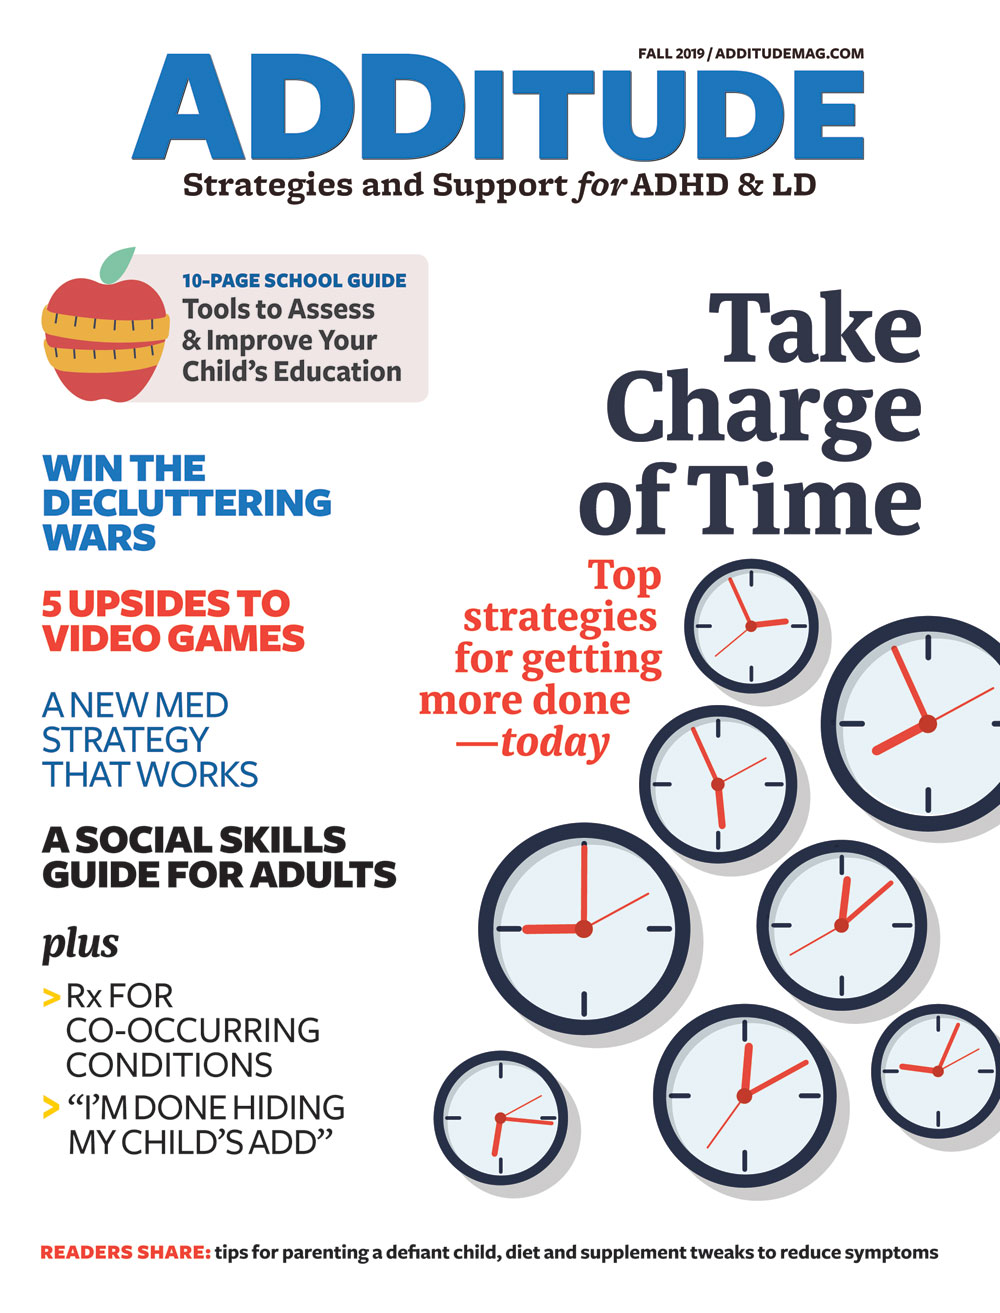 Fall 2019 issue of ADDitude magazine!